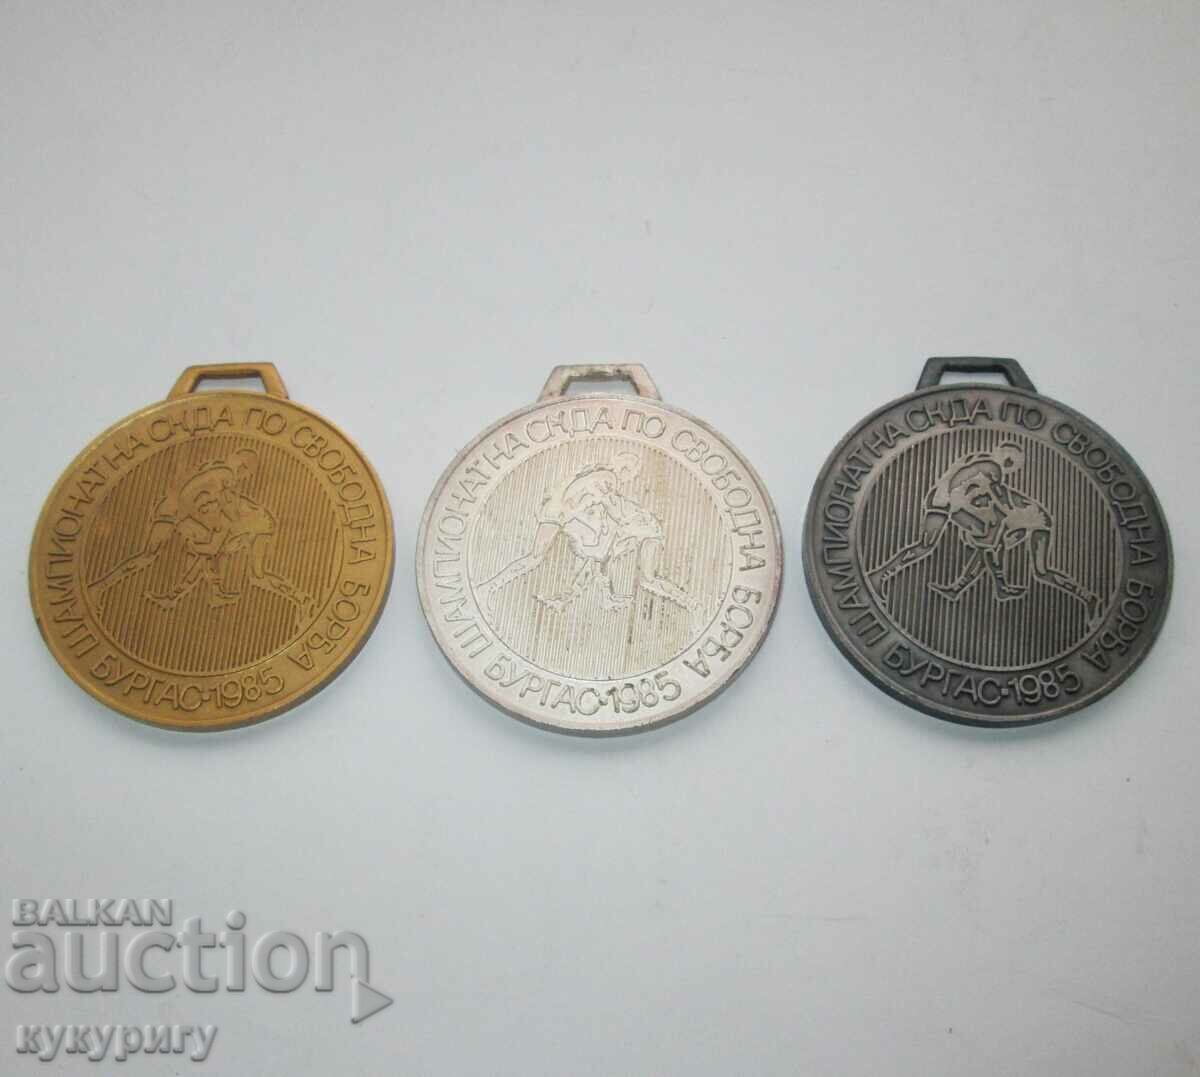 3 army medals SKDA freestyle wrestling championship Burgas 1985